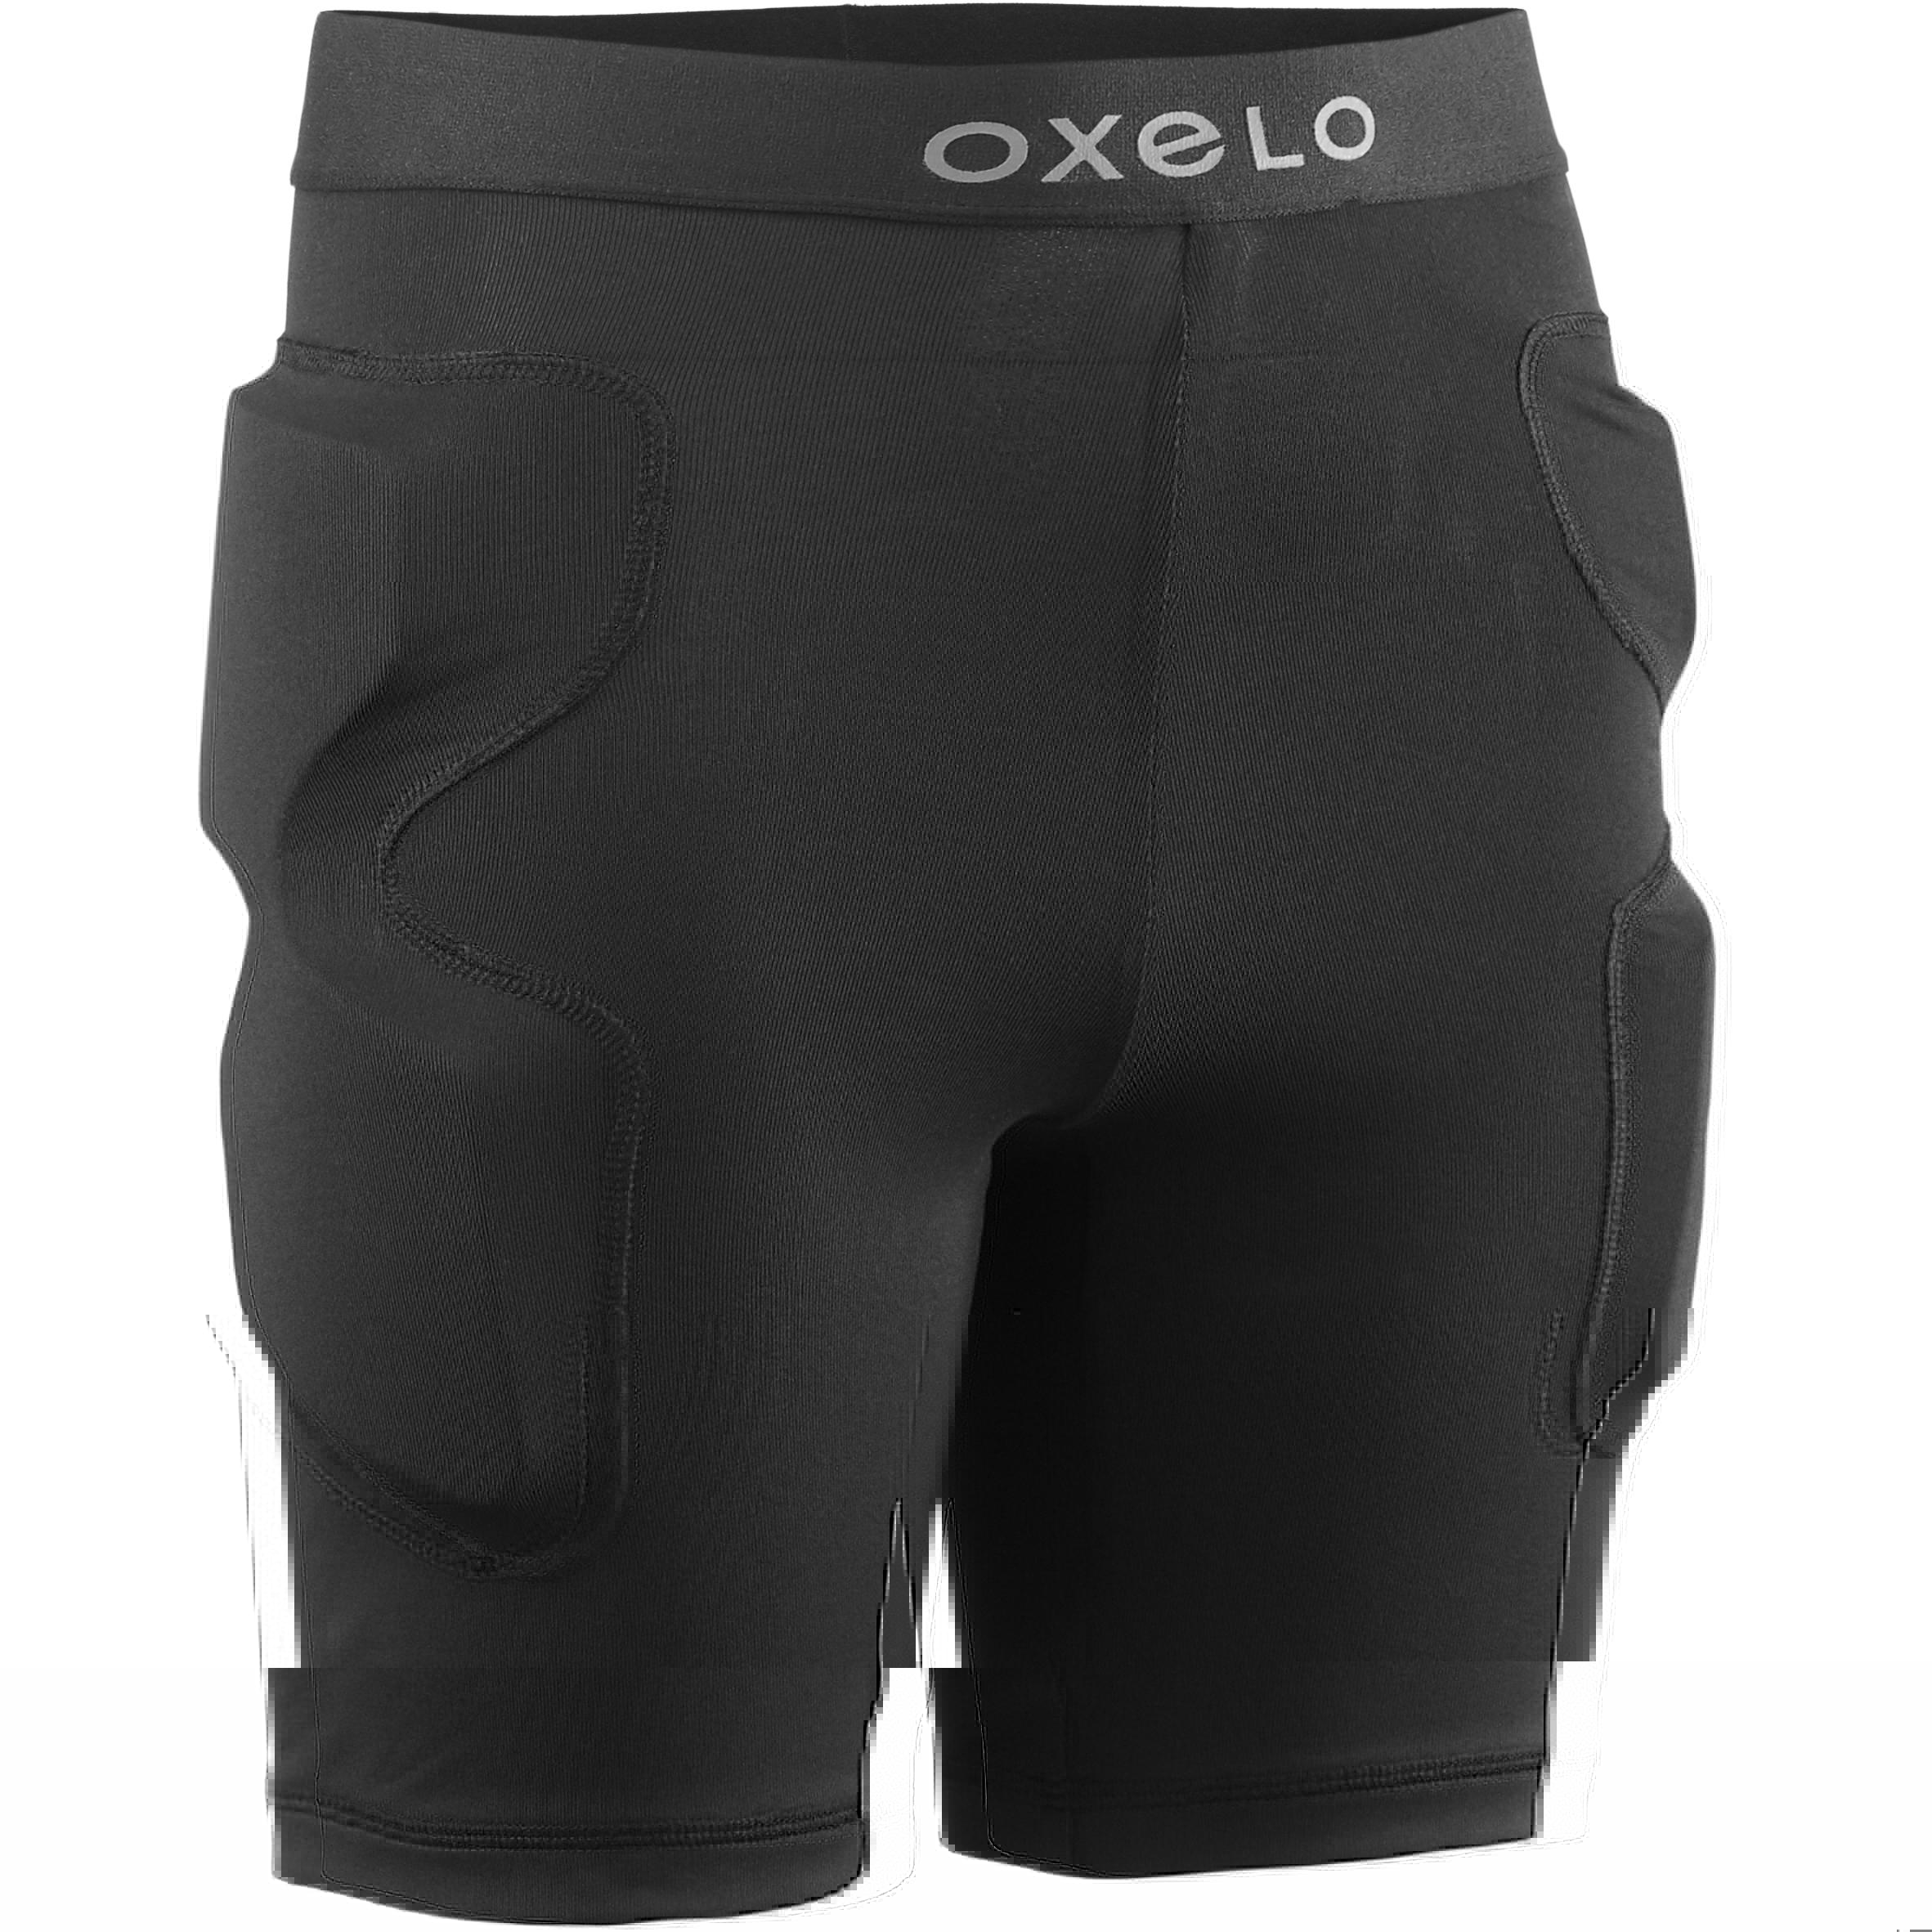 OXELO Skater-Shorts Protection PS100 Inliner Skateboard Scooter Erwachsene schwarz